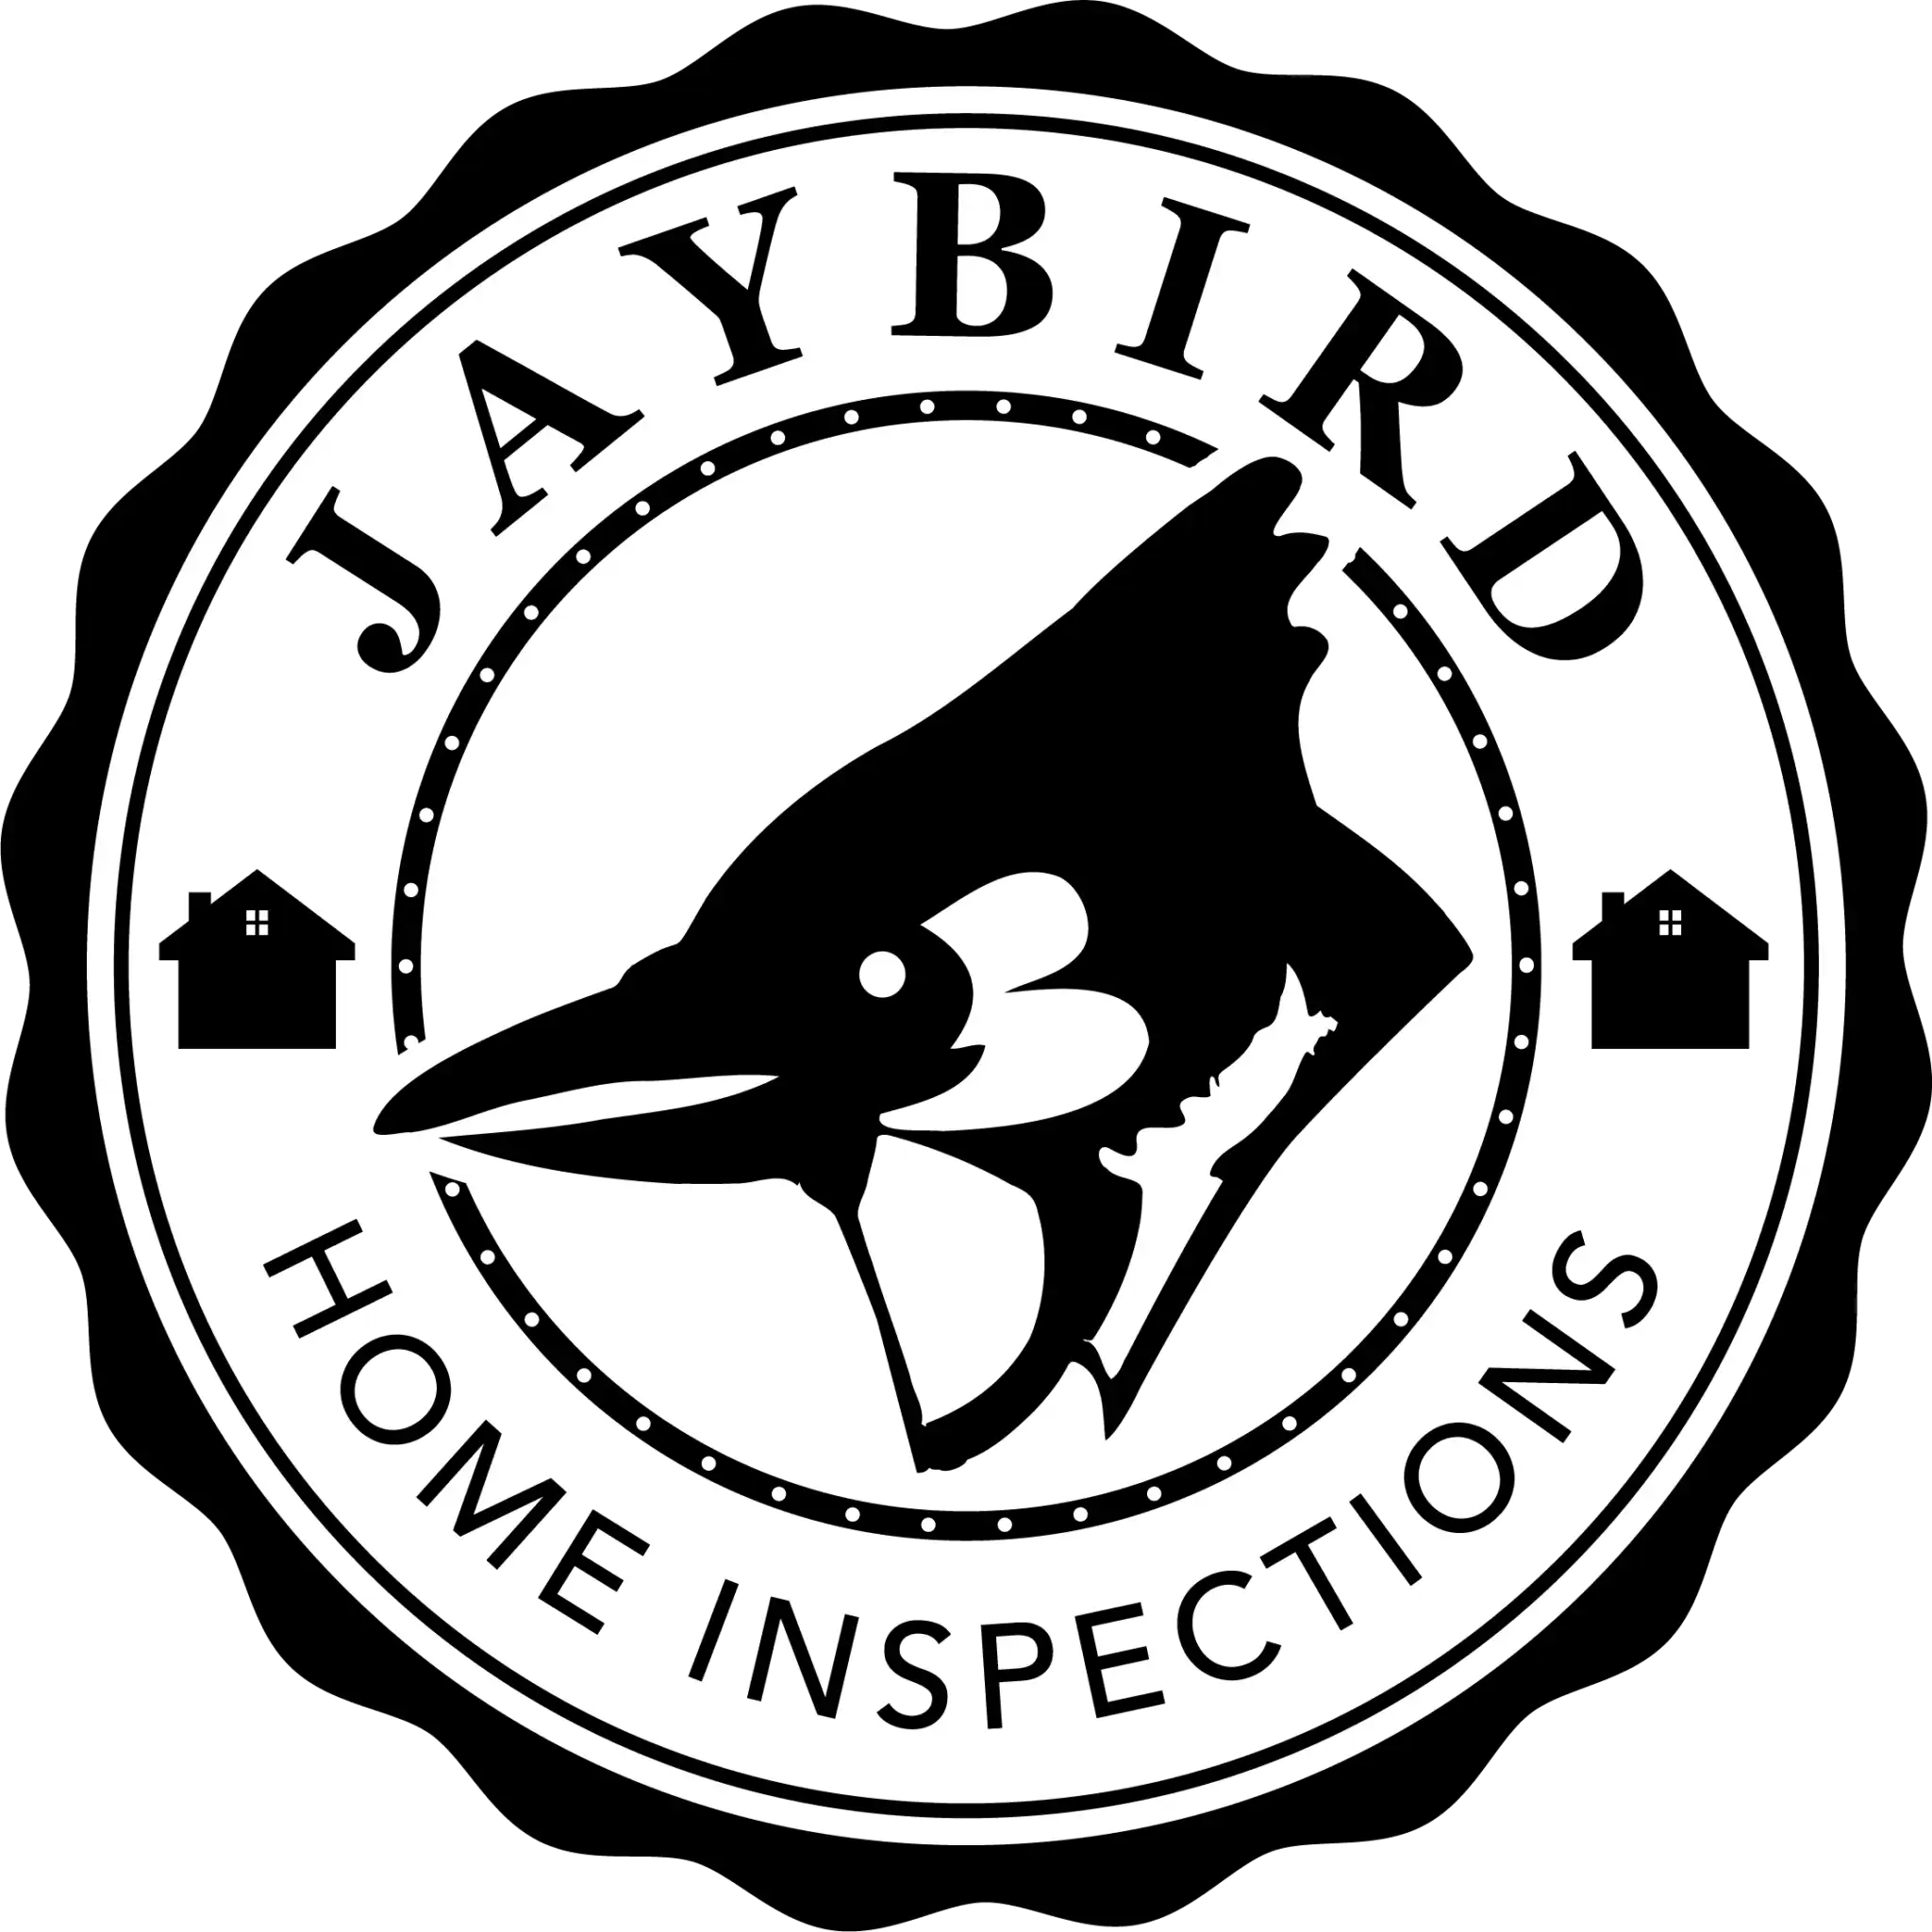 Jay Bird Home Inspections